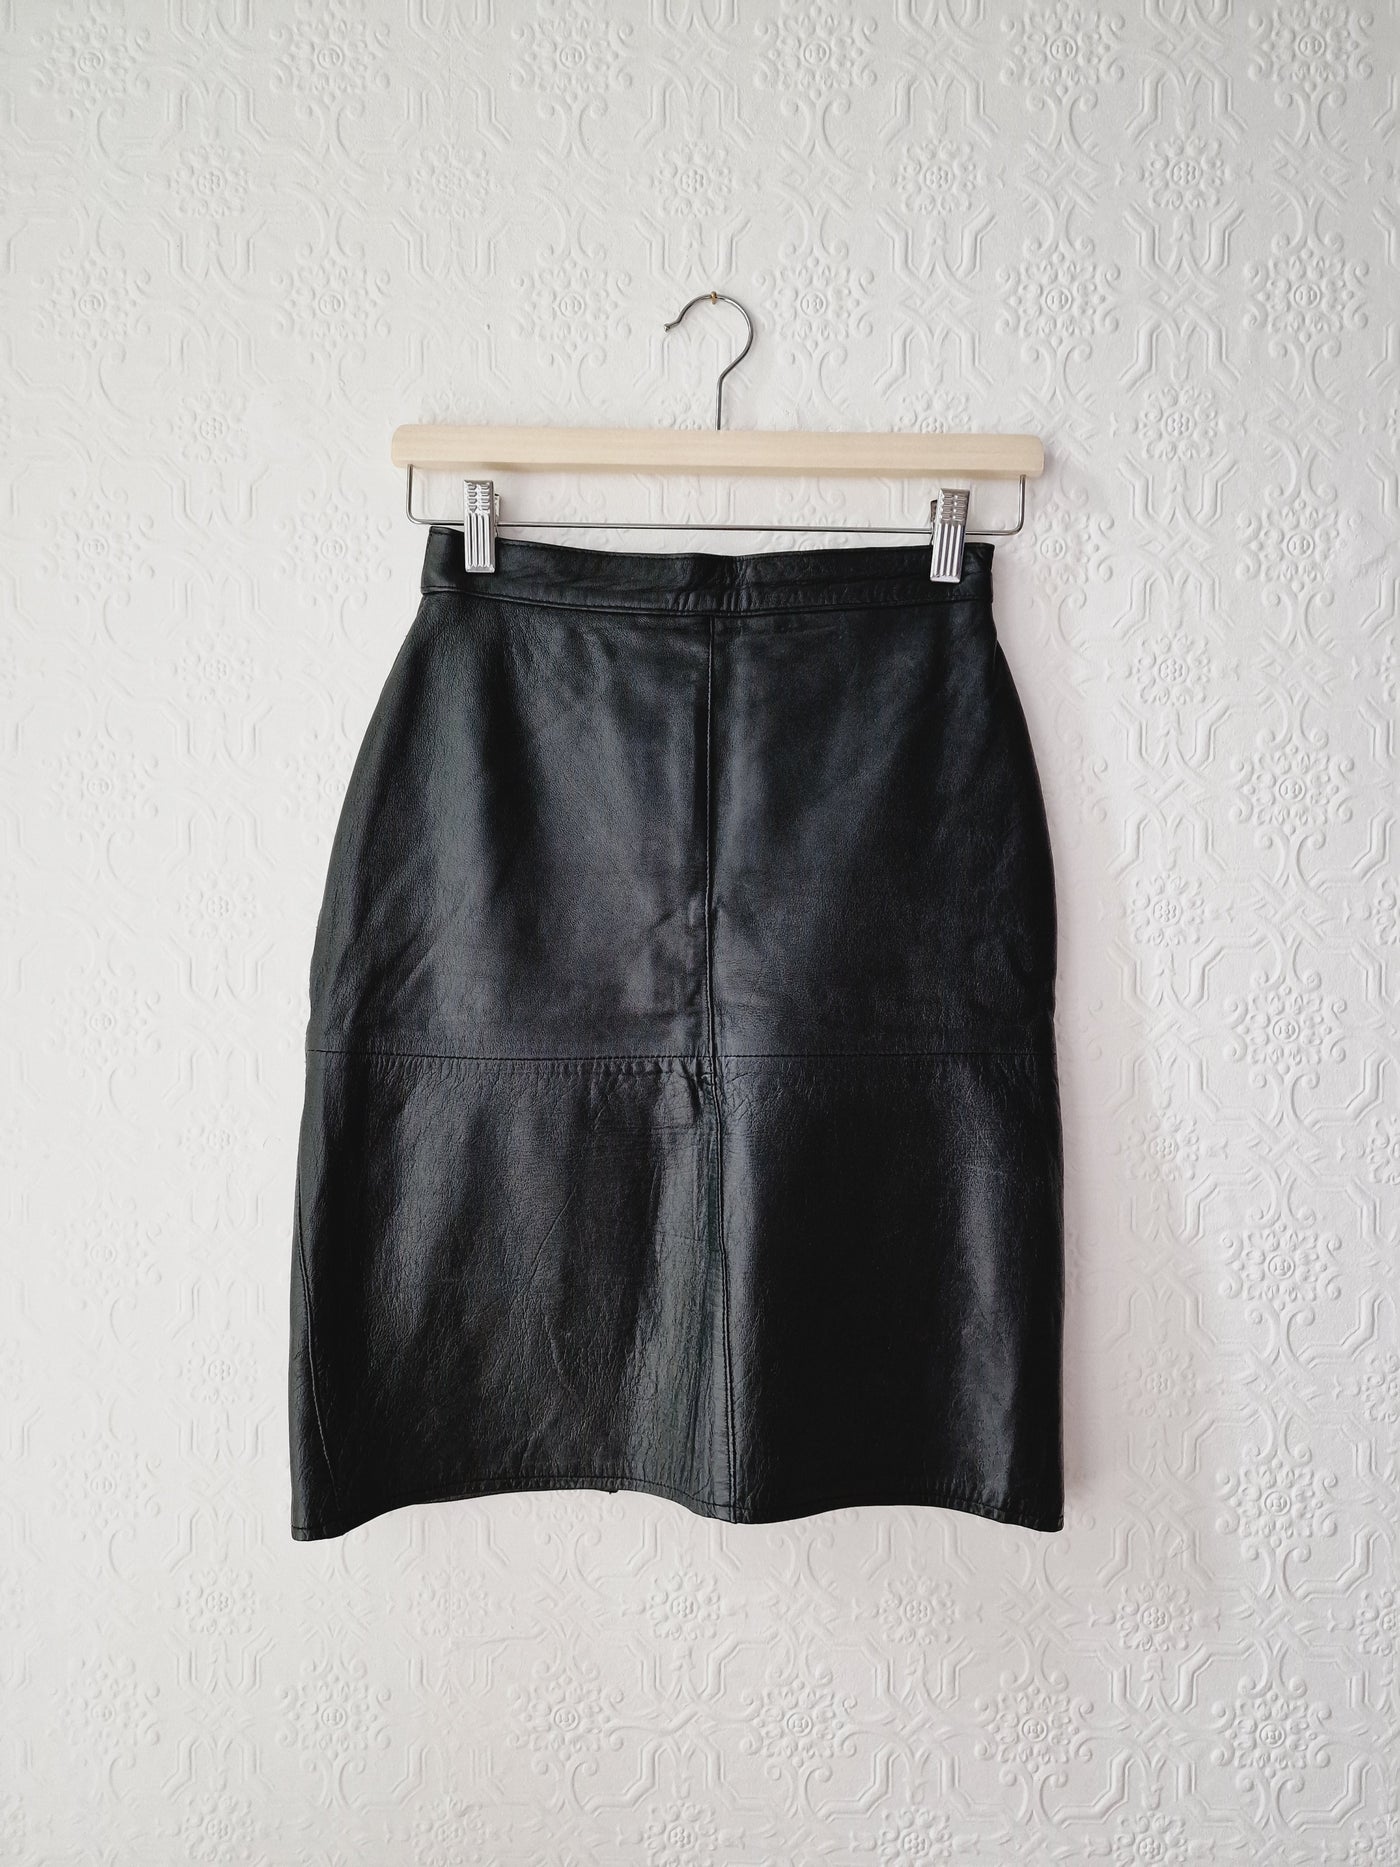 Vintage Black 100% Genuine Leather Skirt - XS